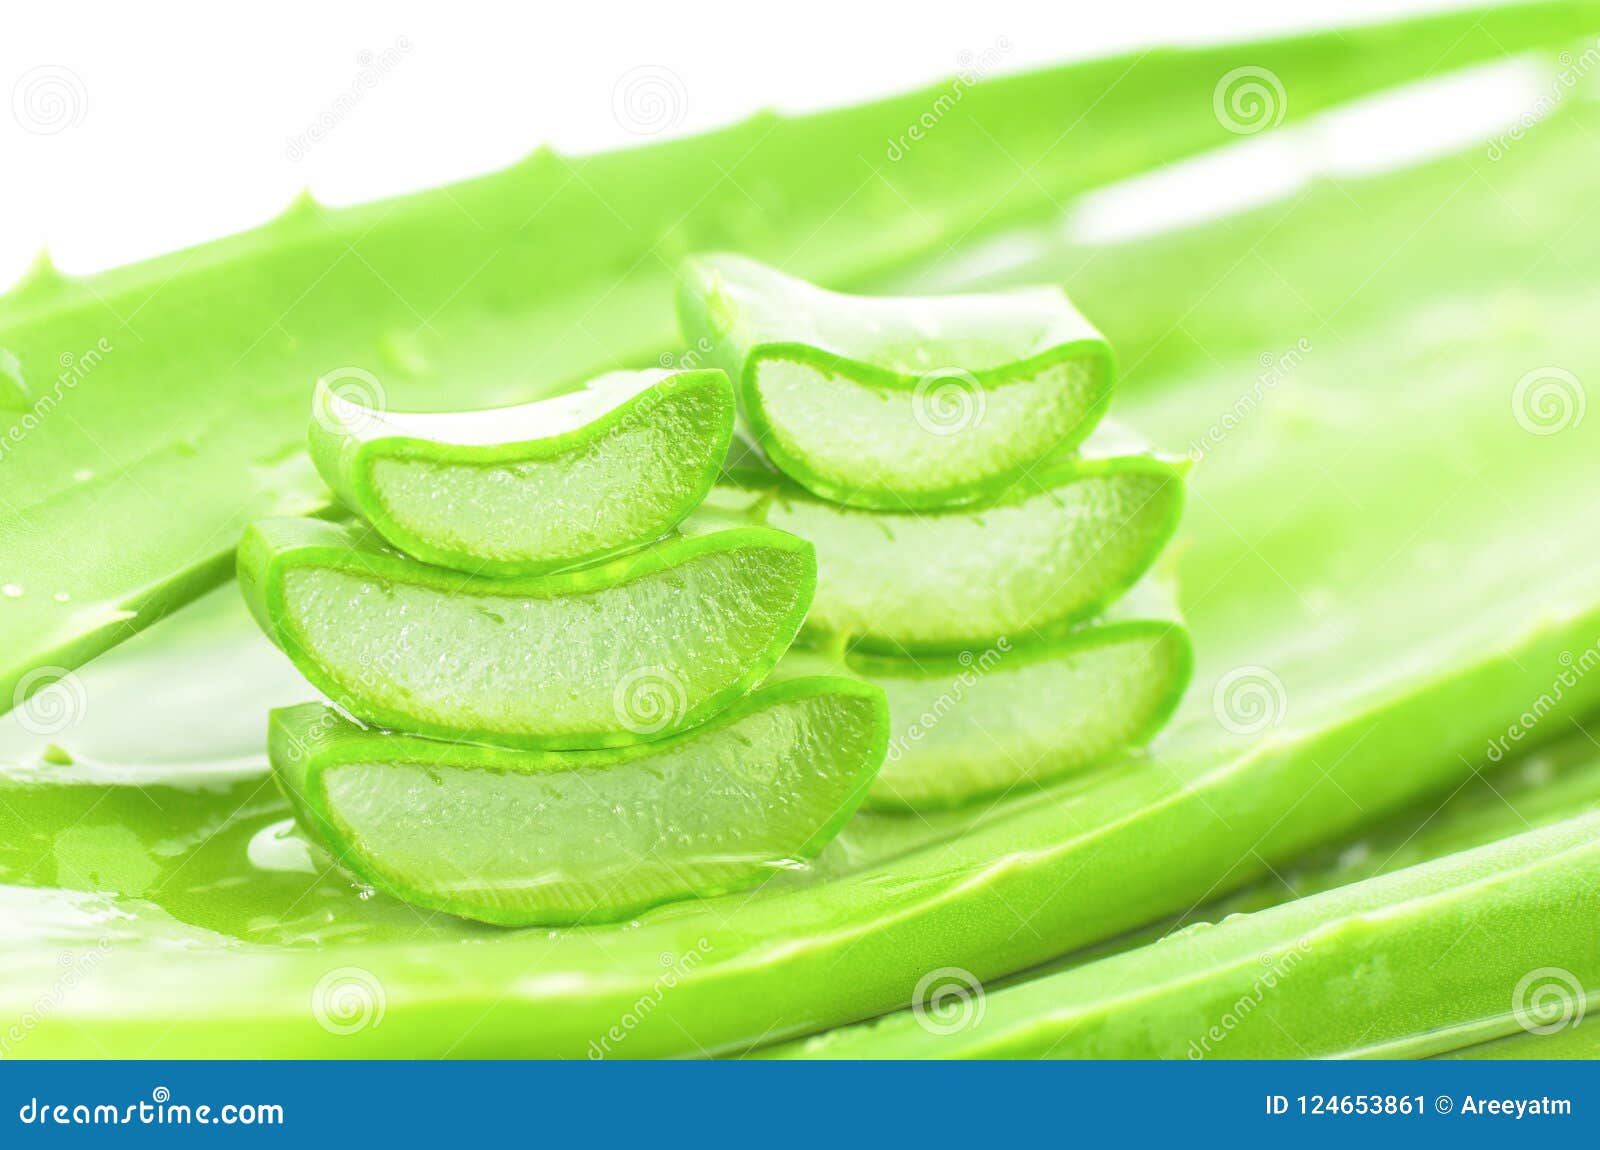 Cut Aloe On Vera Leaves Background Stock Image Image Of Cactus